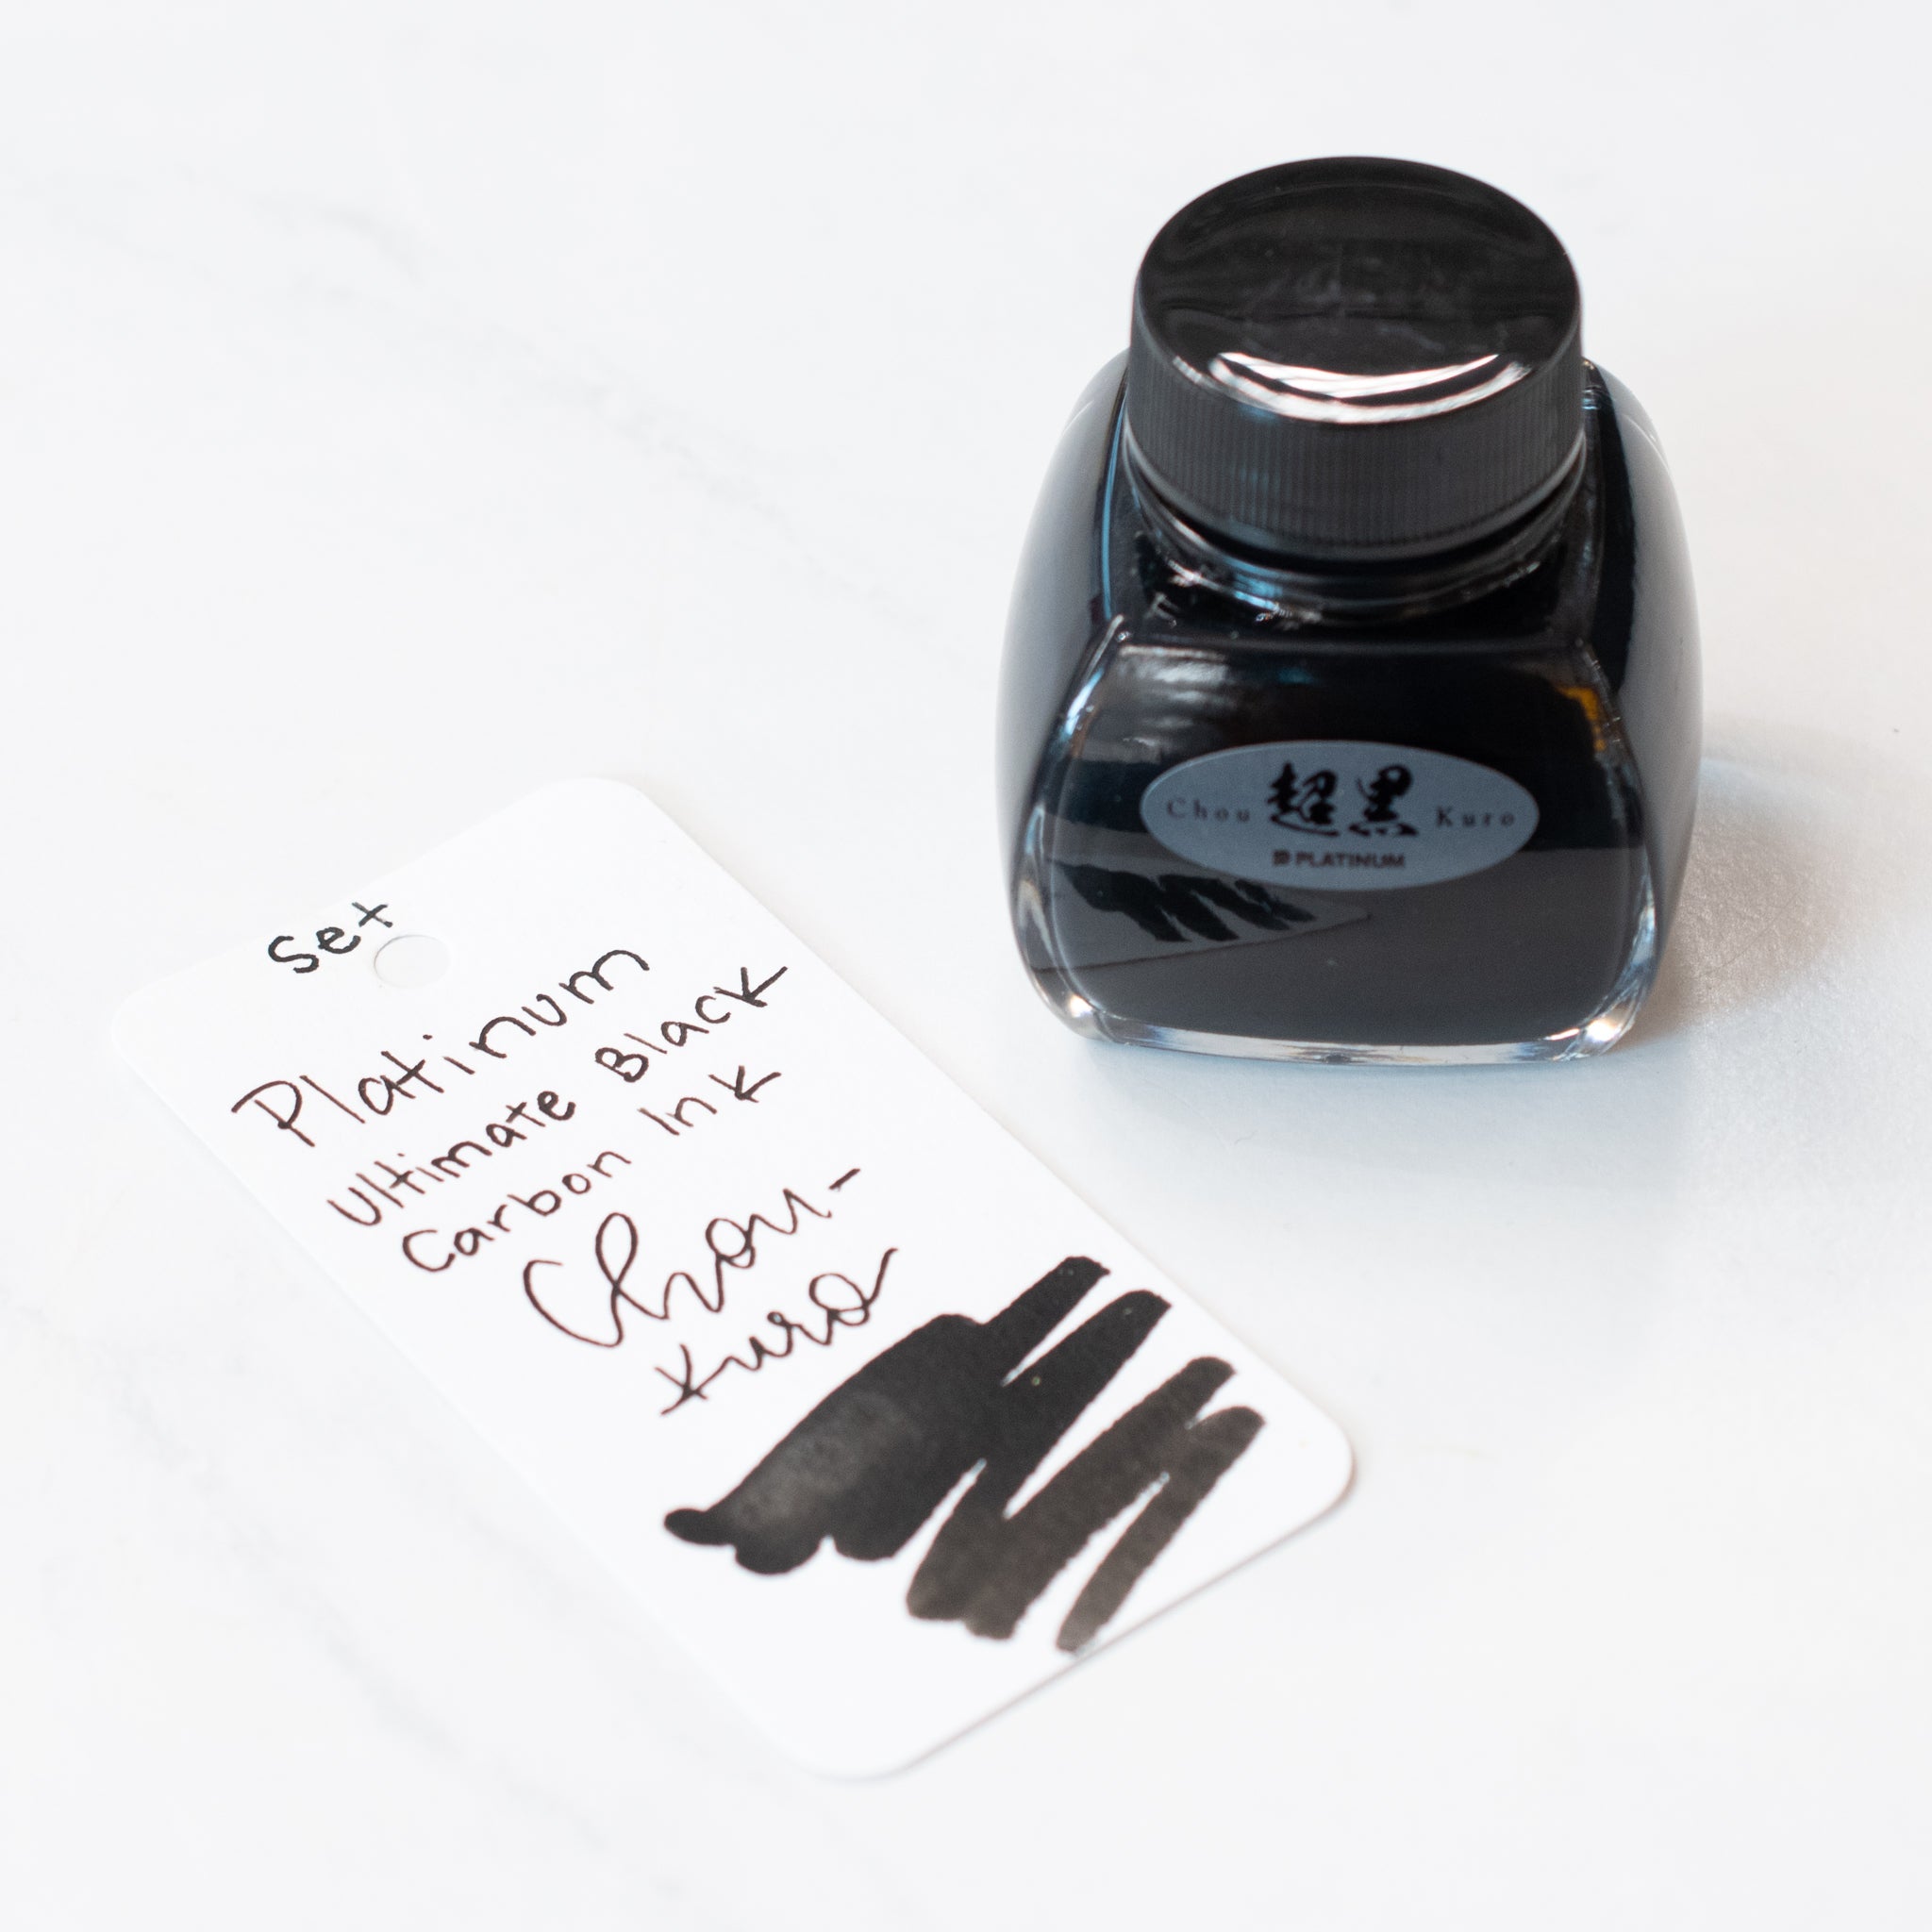 Platinum Carbon Black Fountain Pen Ink